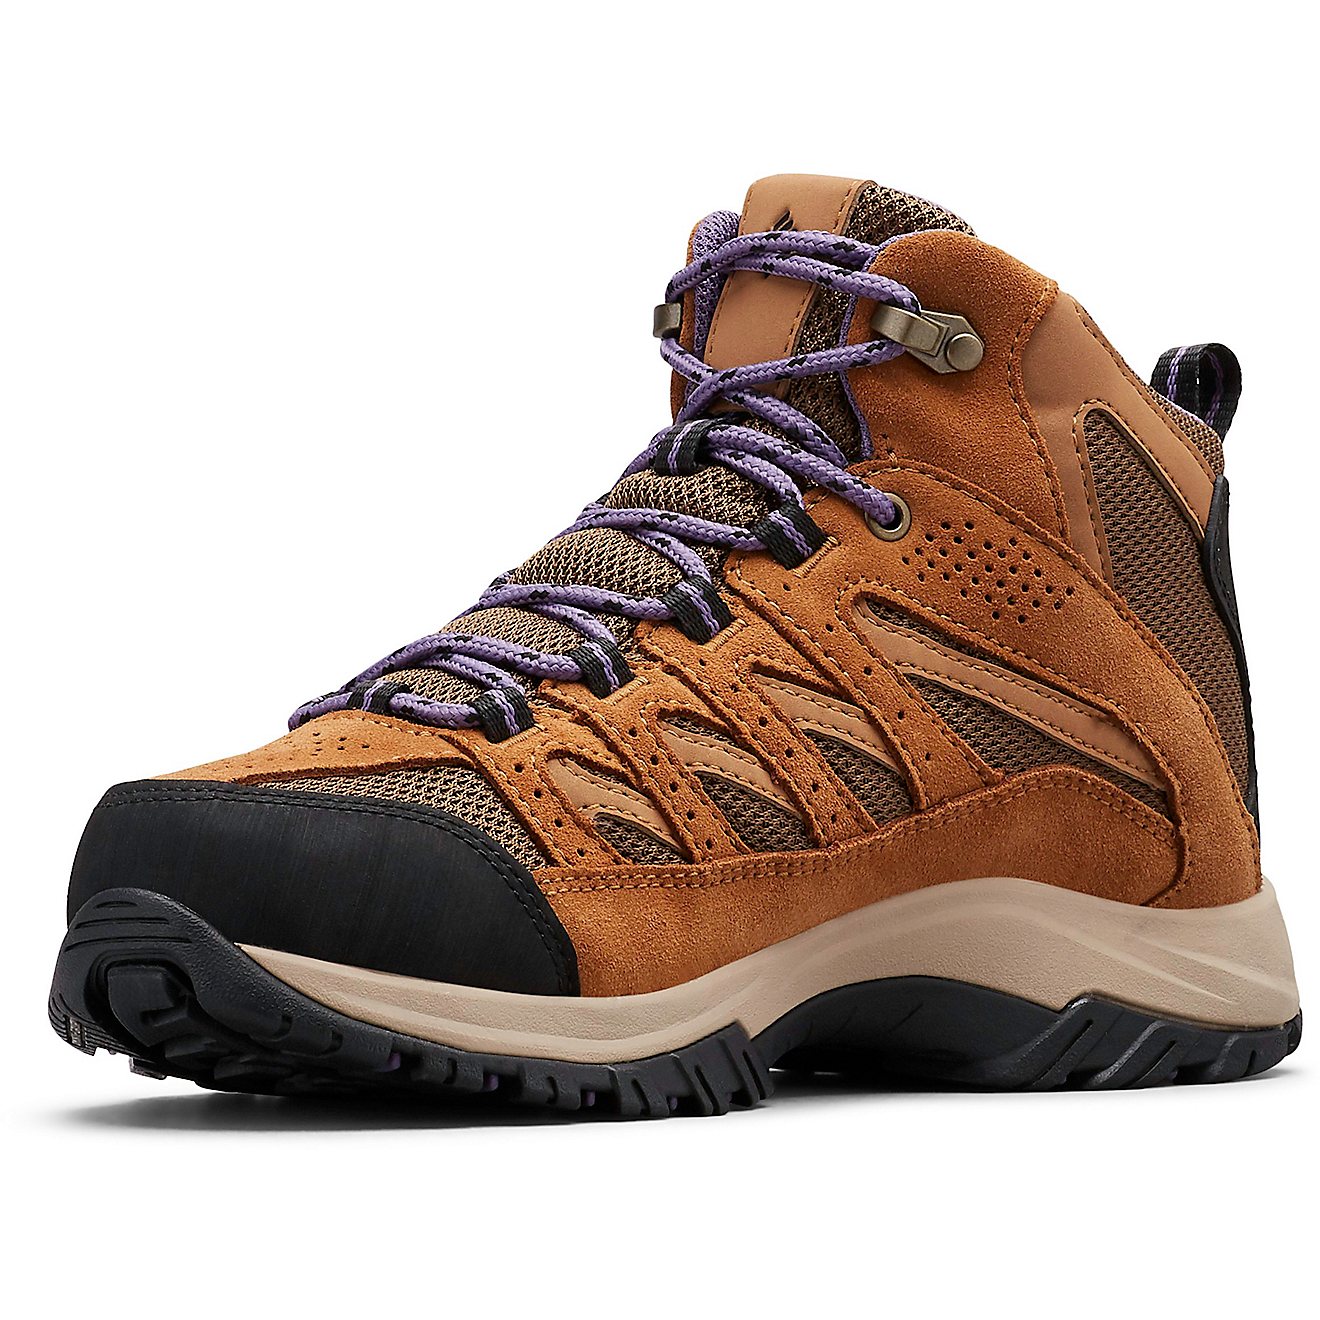 Columbia Women's Crestwood Mid Waterproof Hiking Boot Shoe 